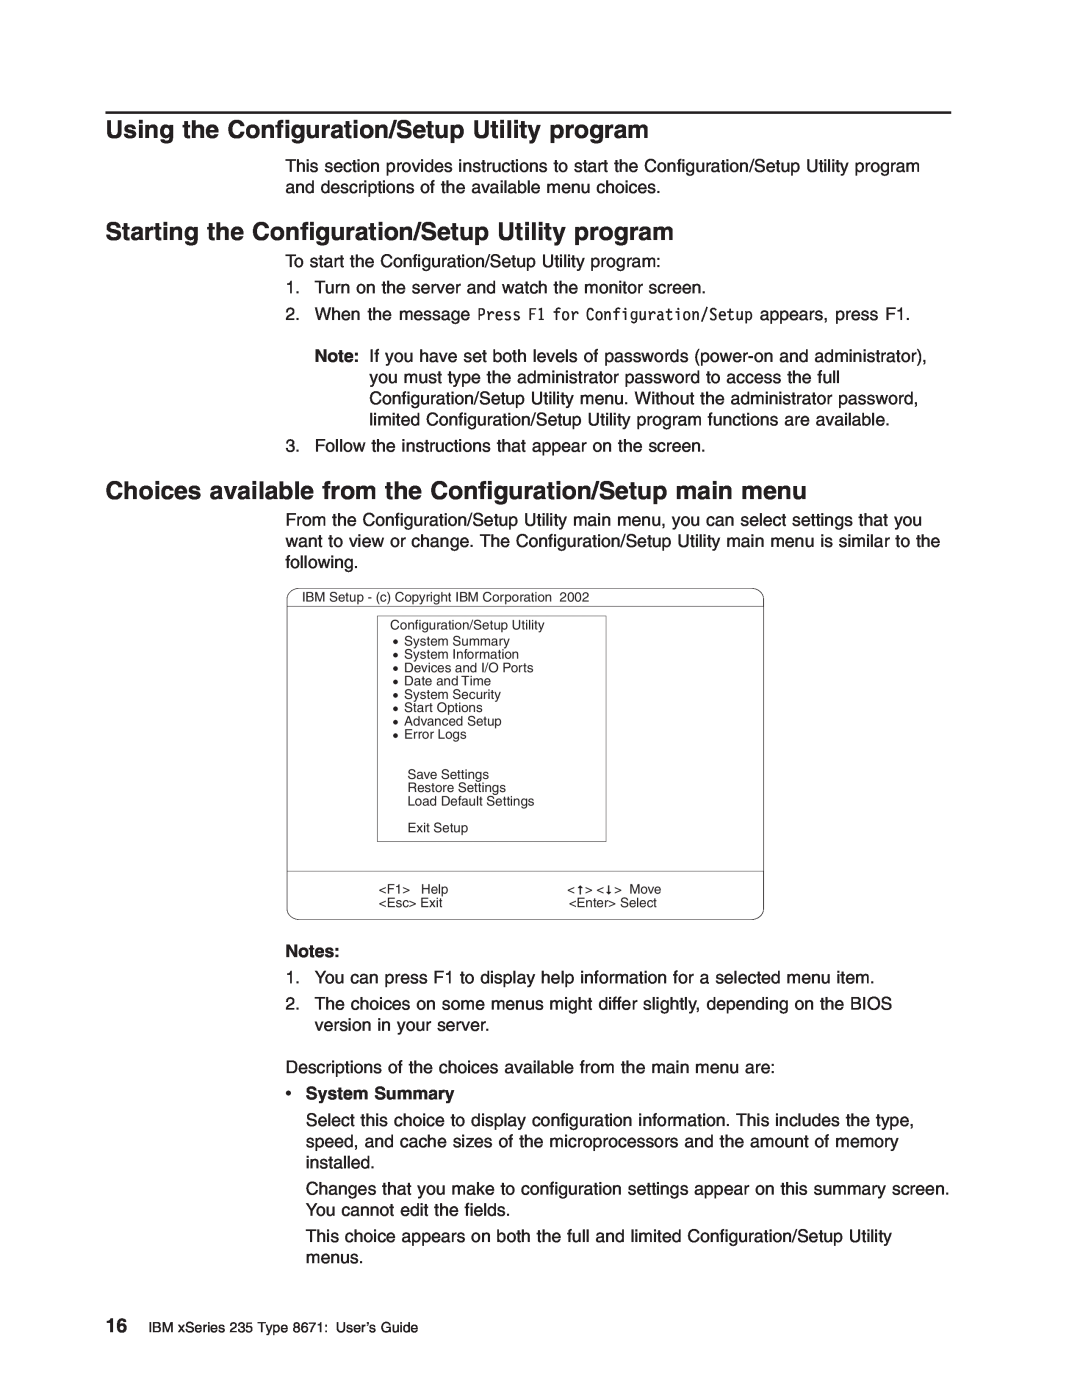 IBM xSeries 235 manual Using the Configuration/Setup Utility program, Starting the Configuration/Setup Utility program 